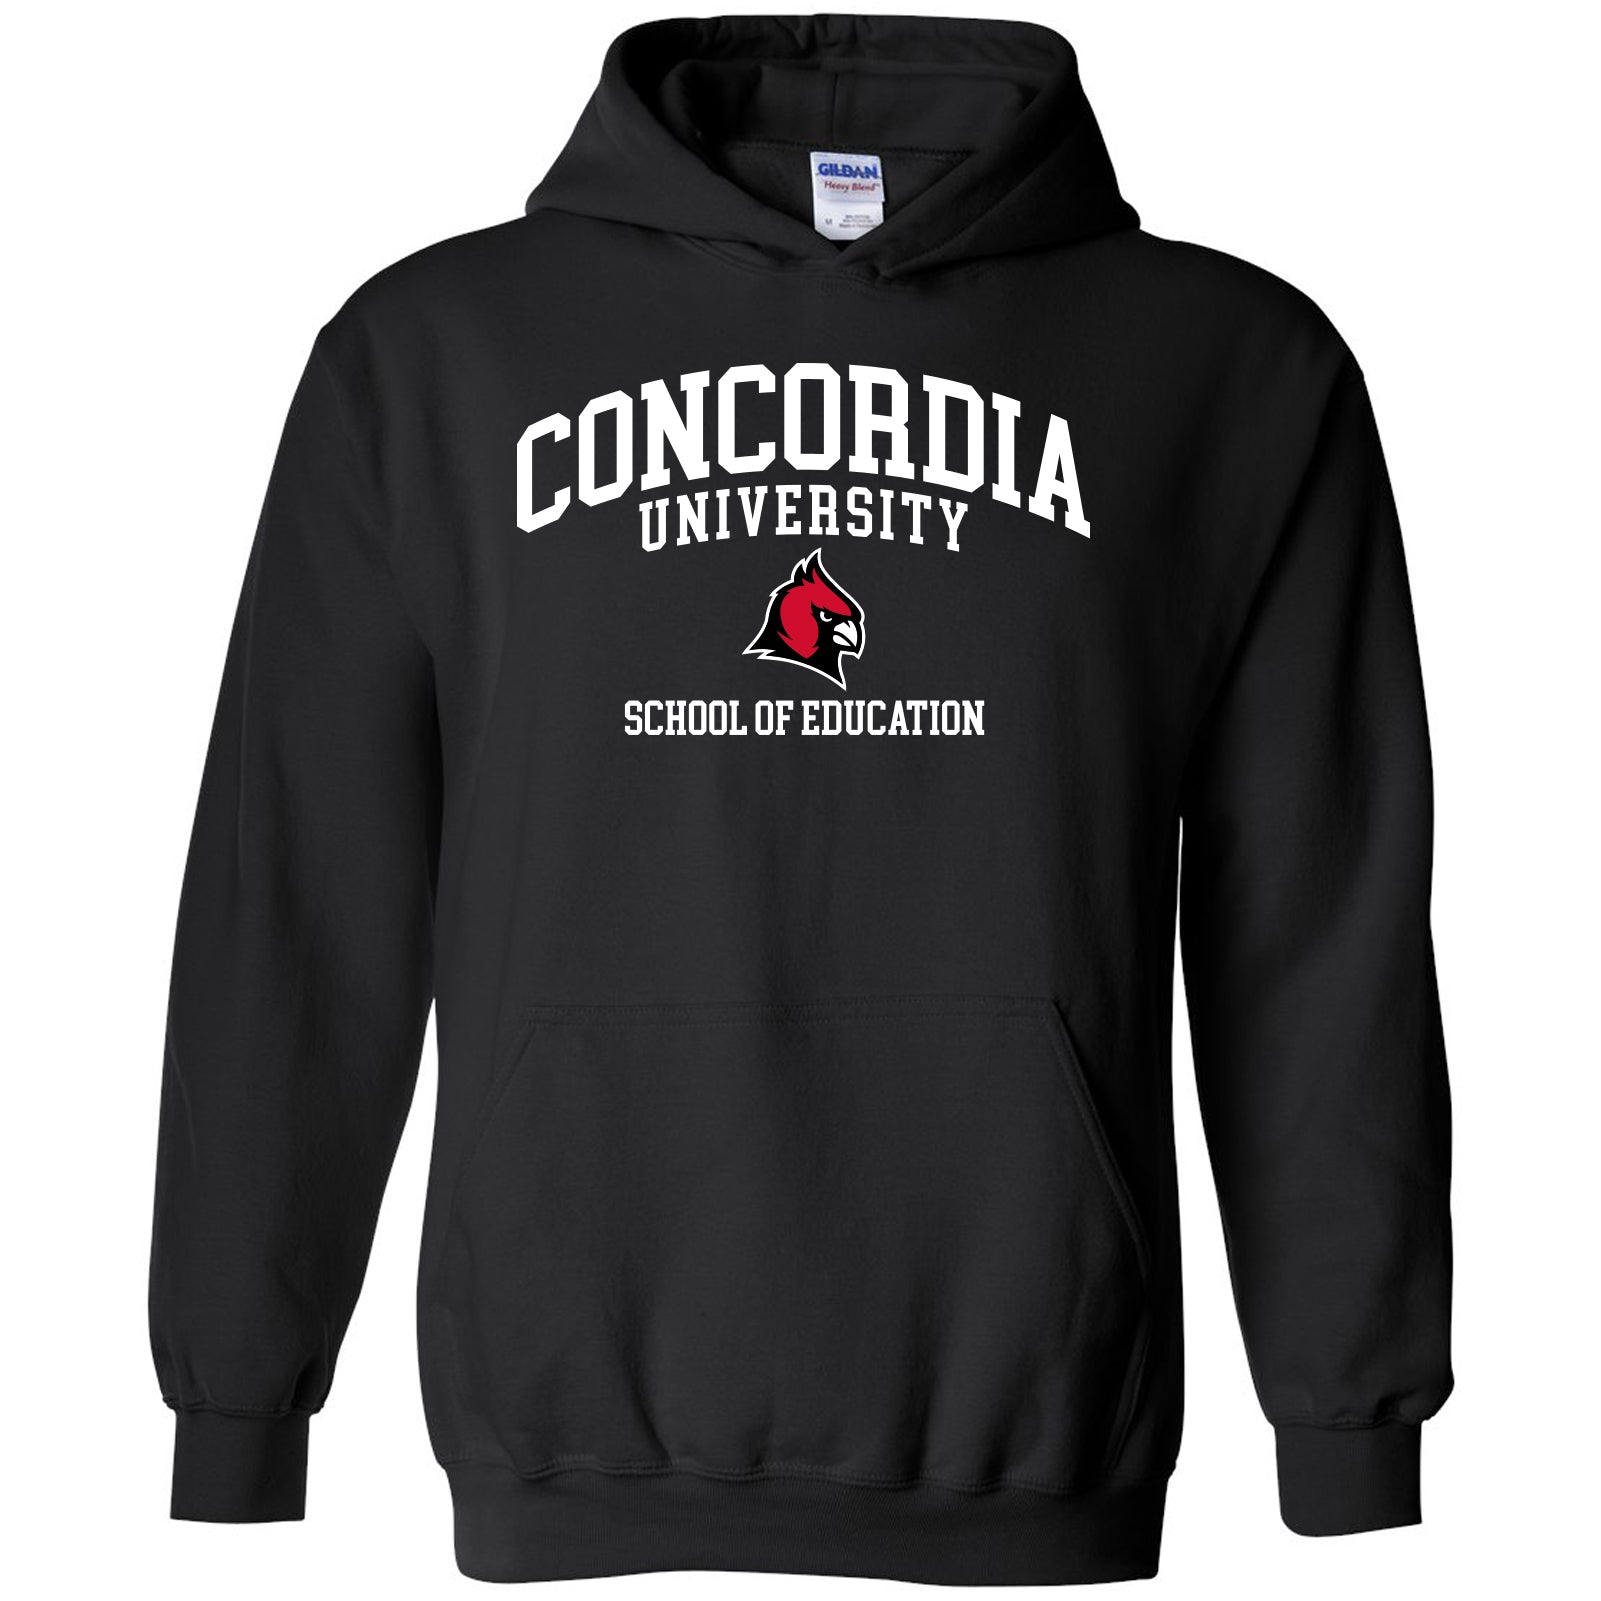 Concordia School of Education Hooded Sweatshirt - Black